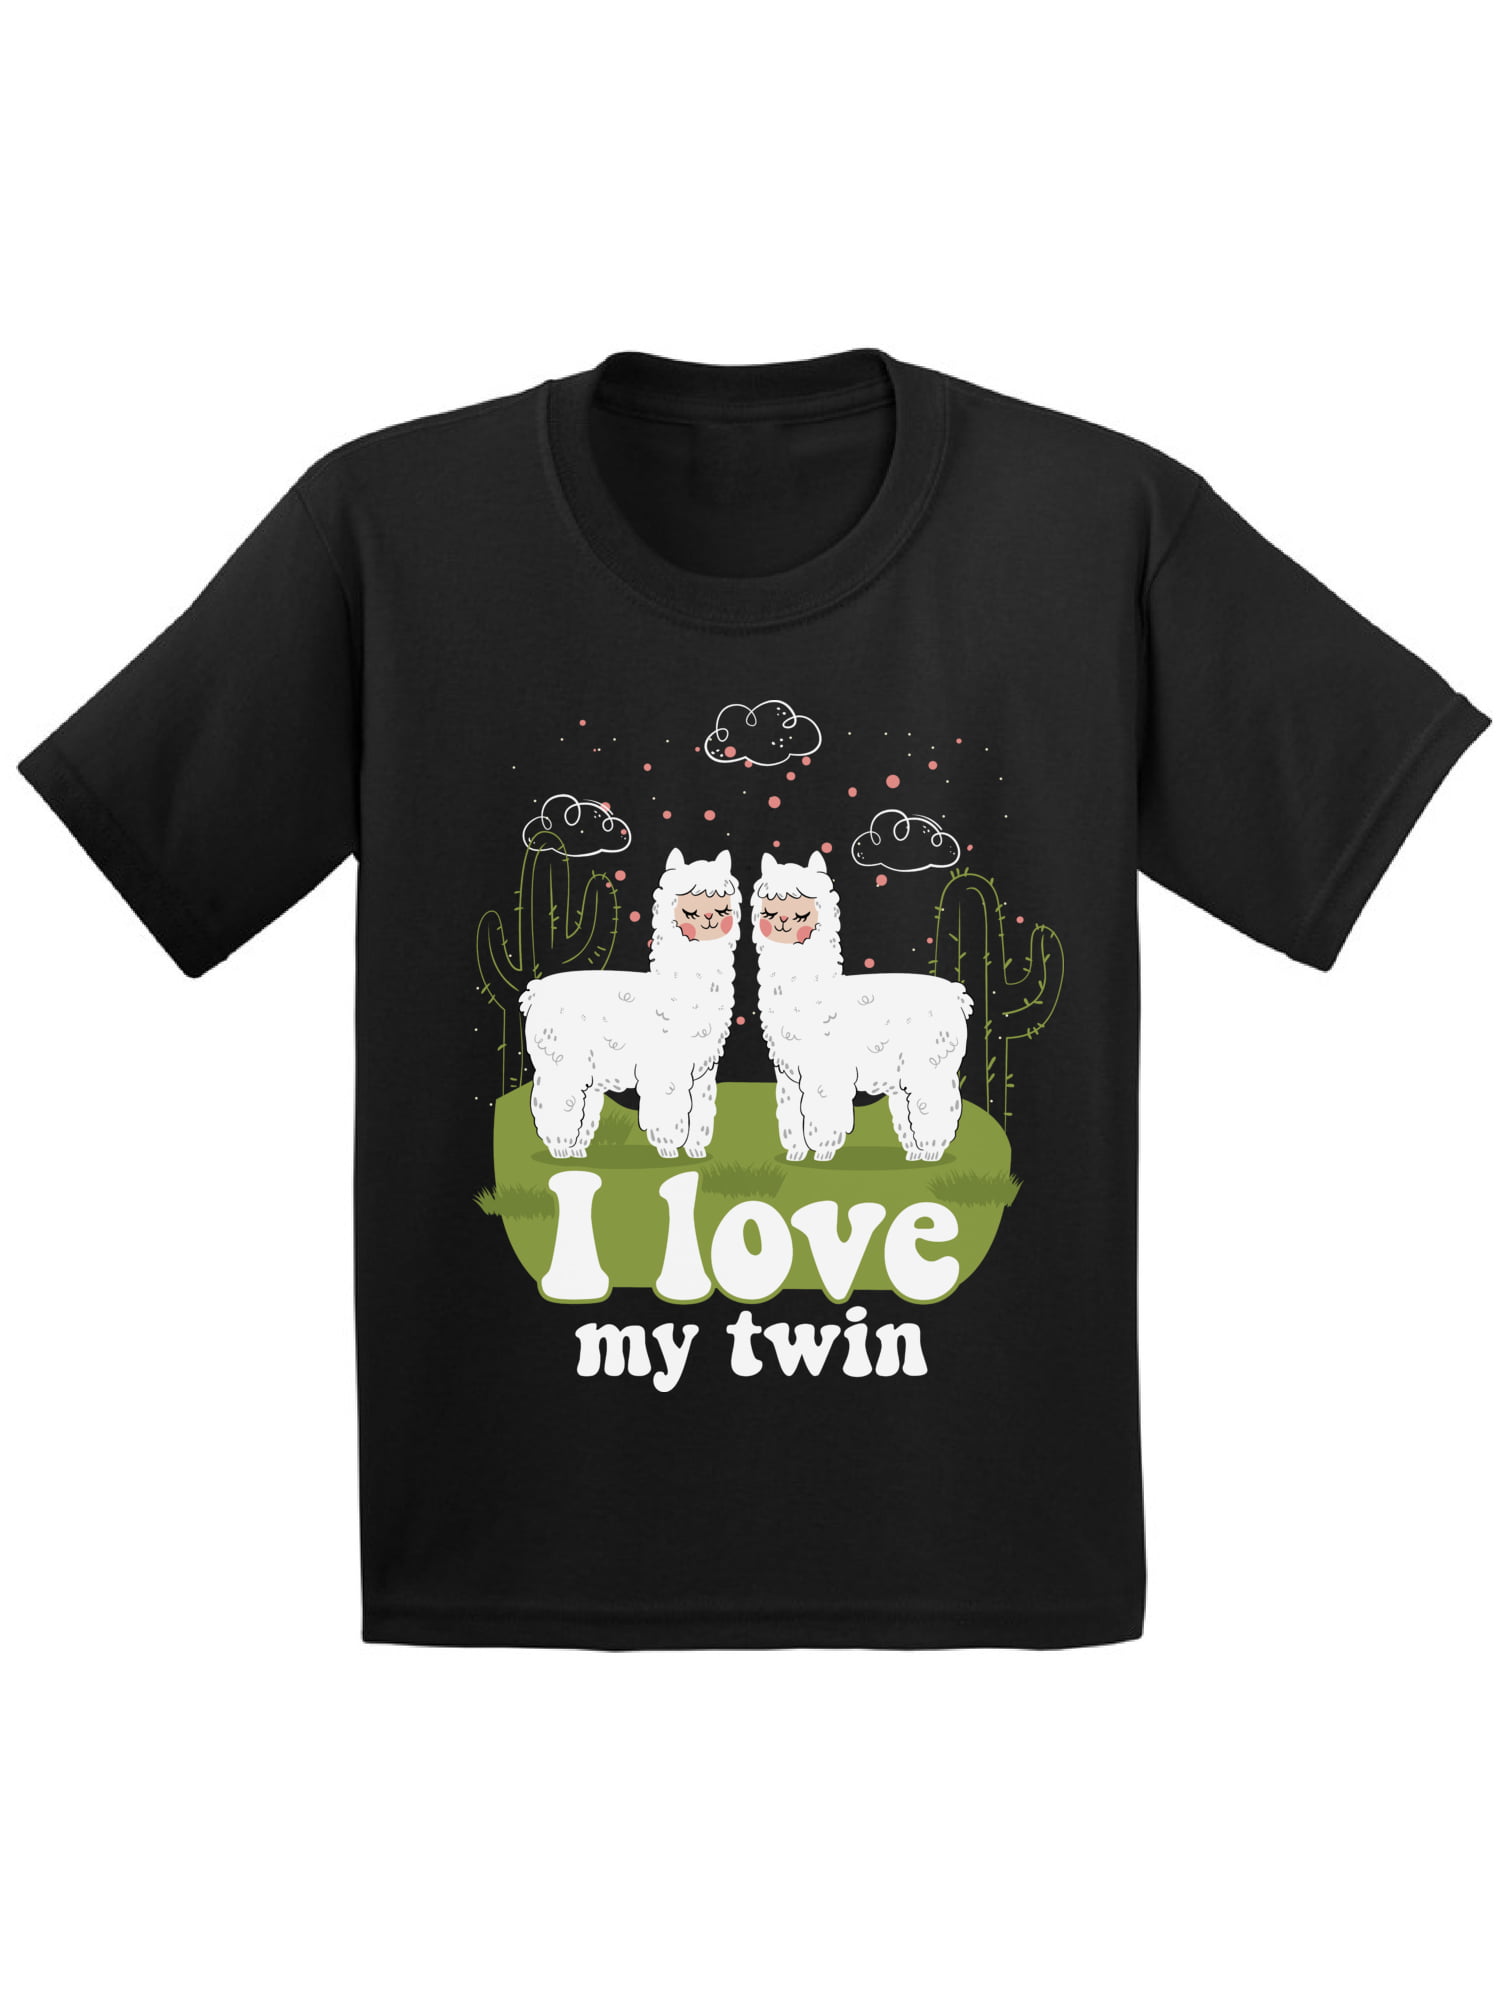 twin shirts